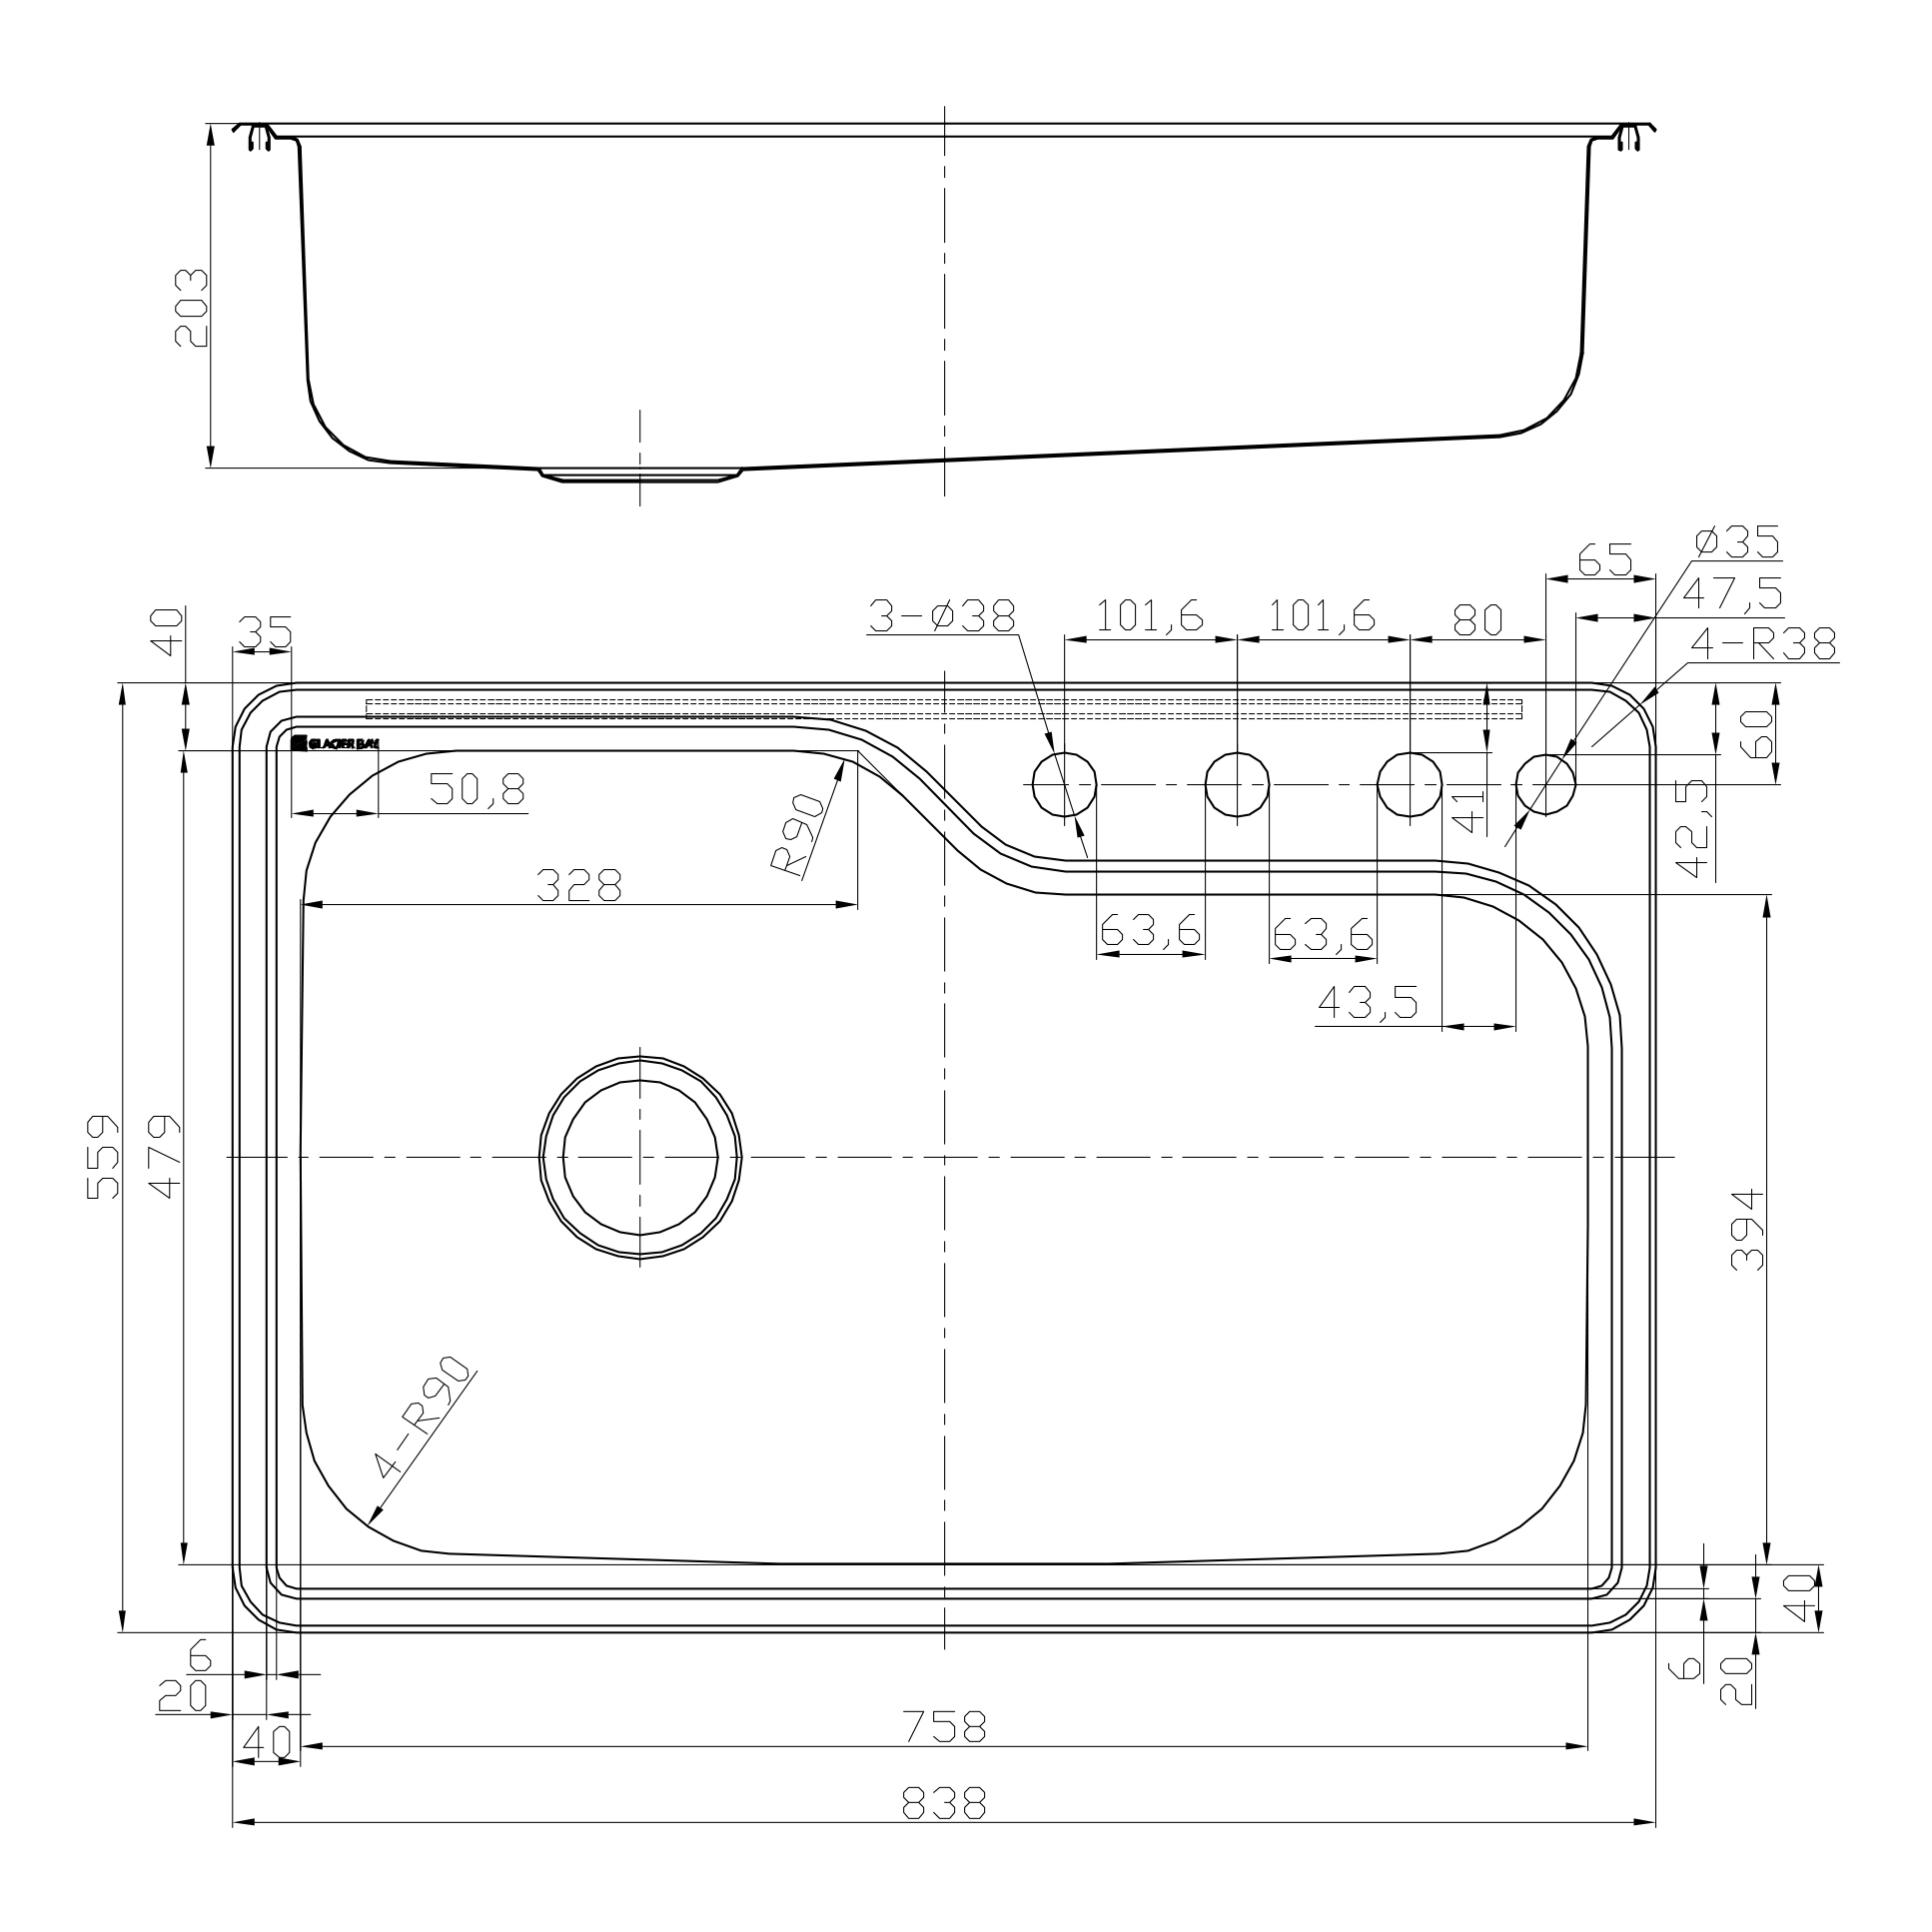 Bovenmontage Dual Mount Drop In Rechthoekige Single Bowl Pressed Drawn Kitchen Sink van roestvrij staal